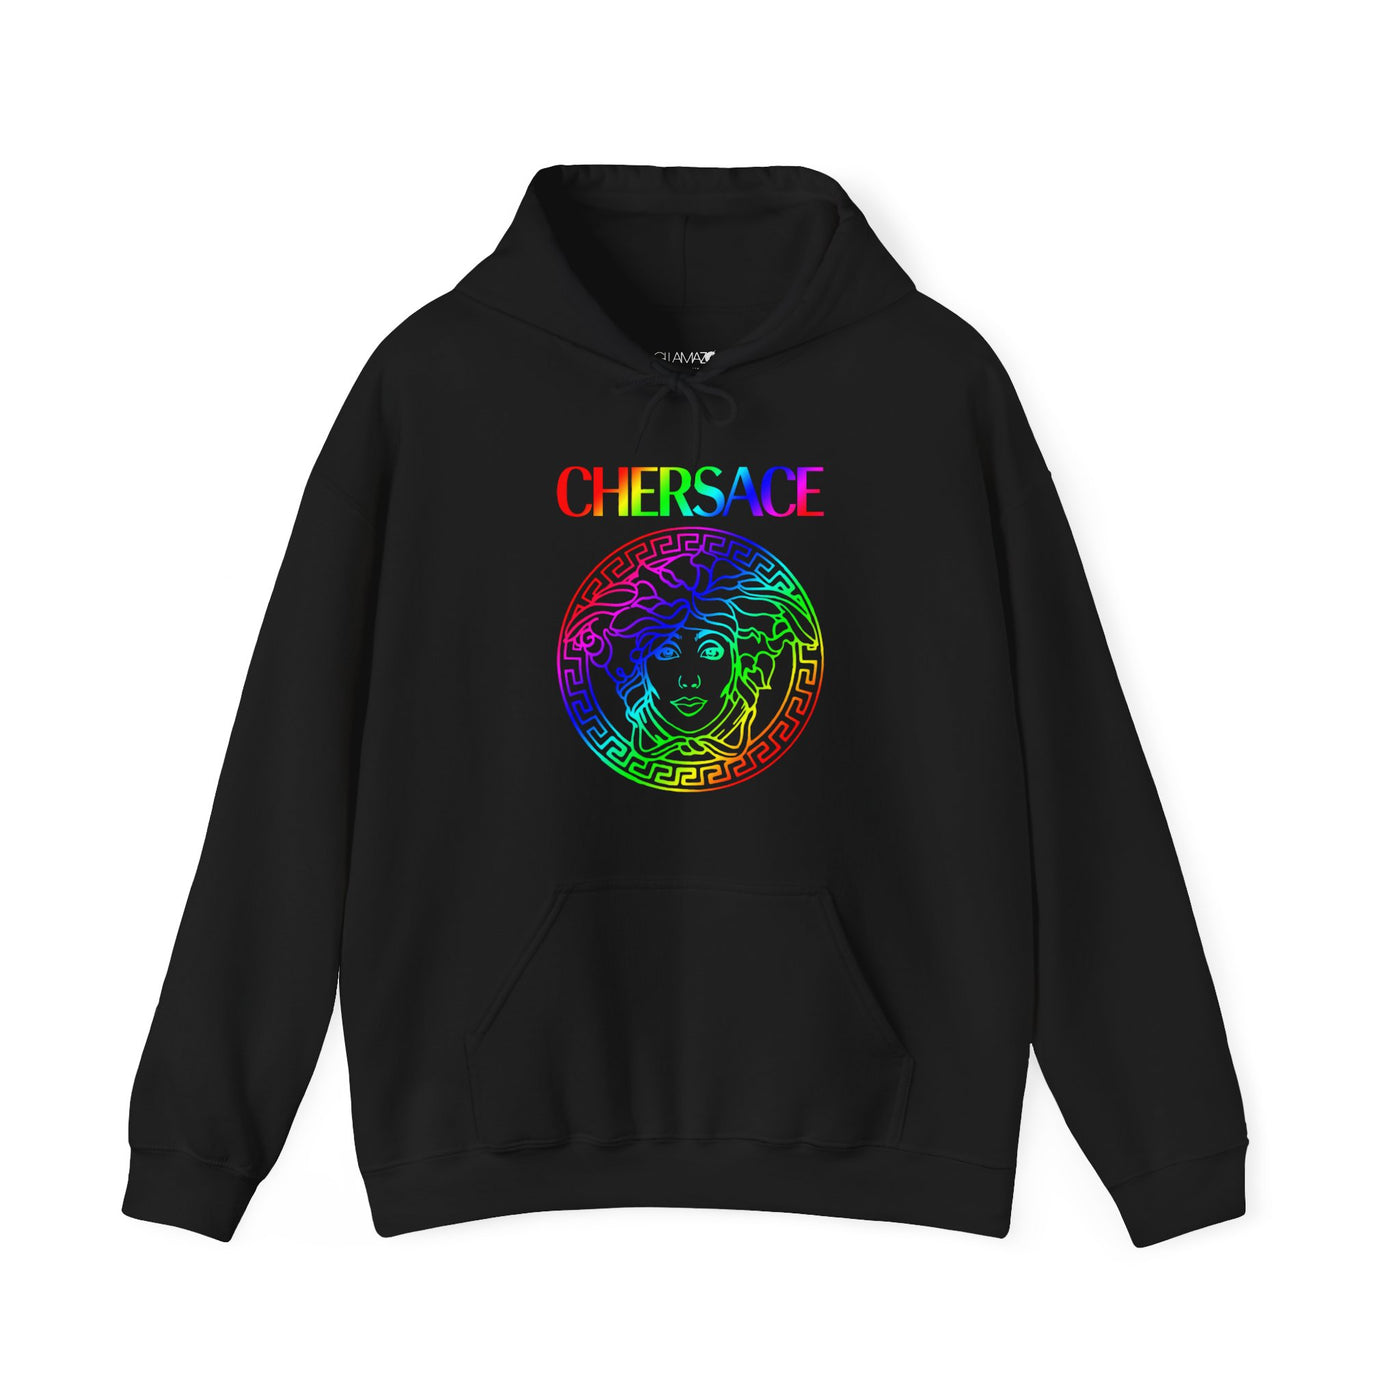 Shop Cher CHERSACE Premium Hoodie by Gllamazon. Color: Black.